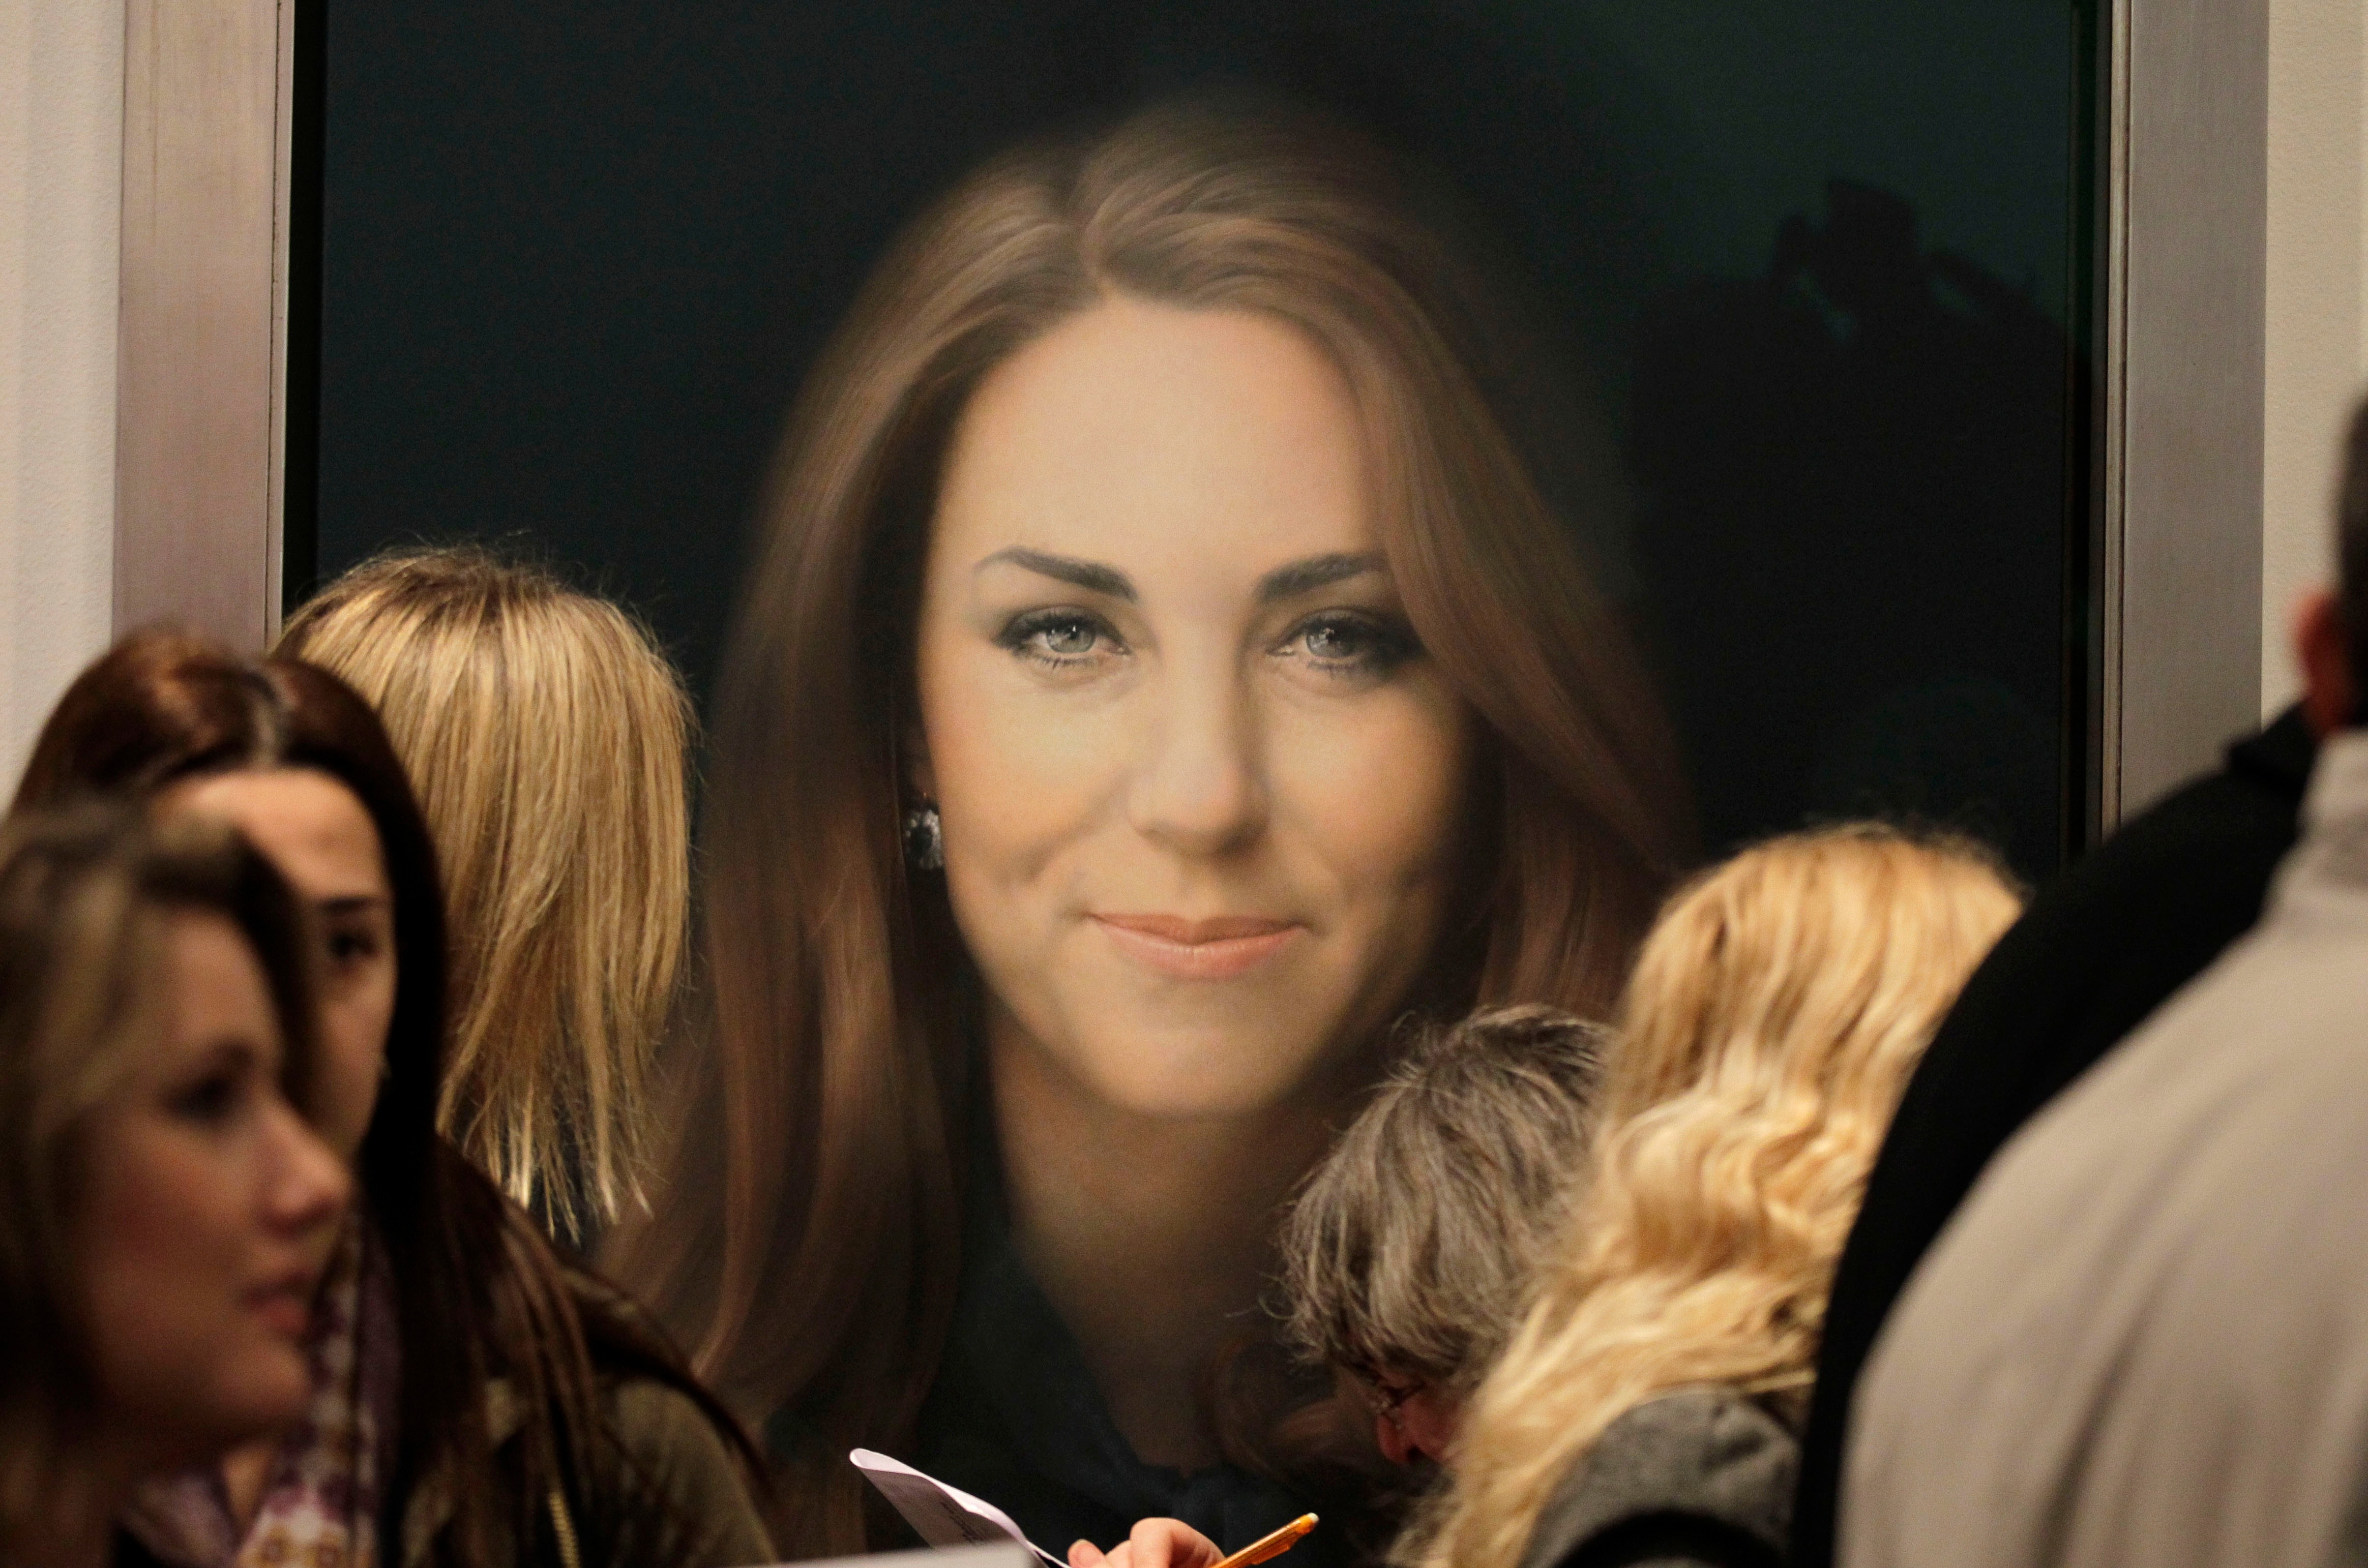 Kate Middleton portrait has critics divided | Fox News